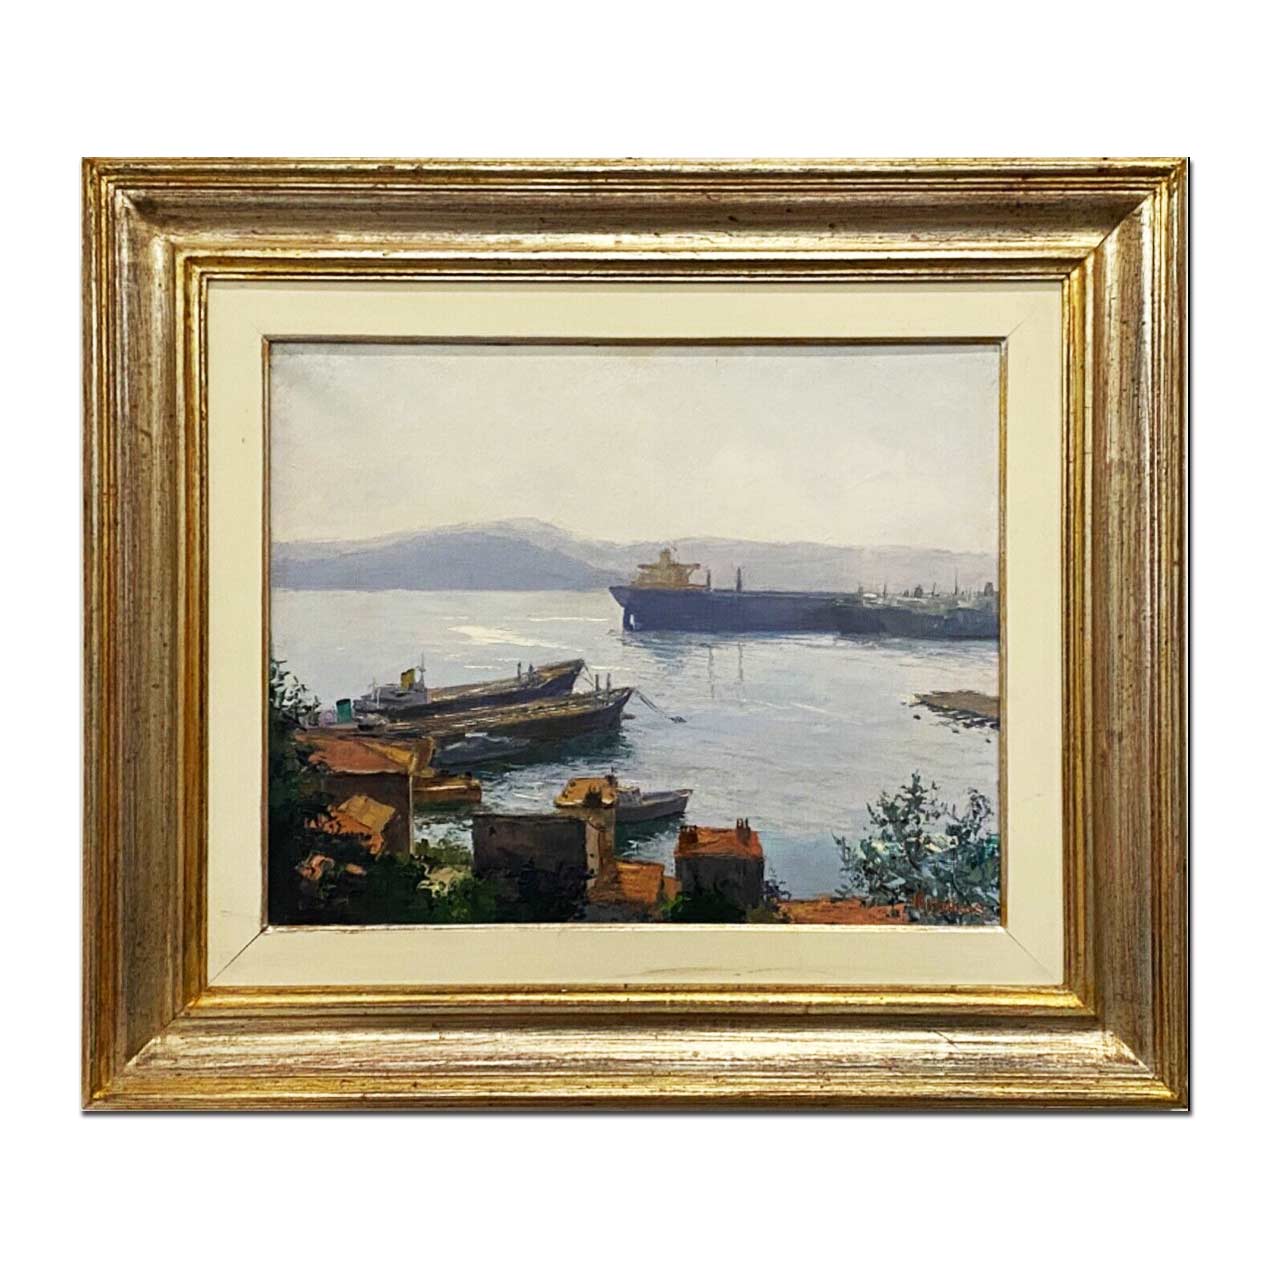 Giuseppe Arigliano: dipinto ad olio su tela “Navi e case controluce” – Immagine principale